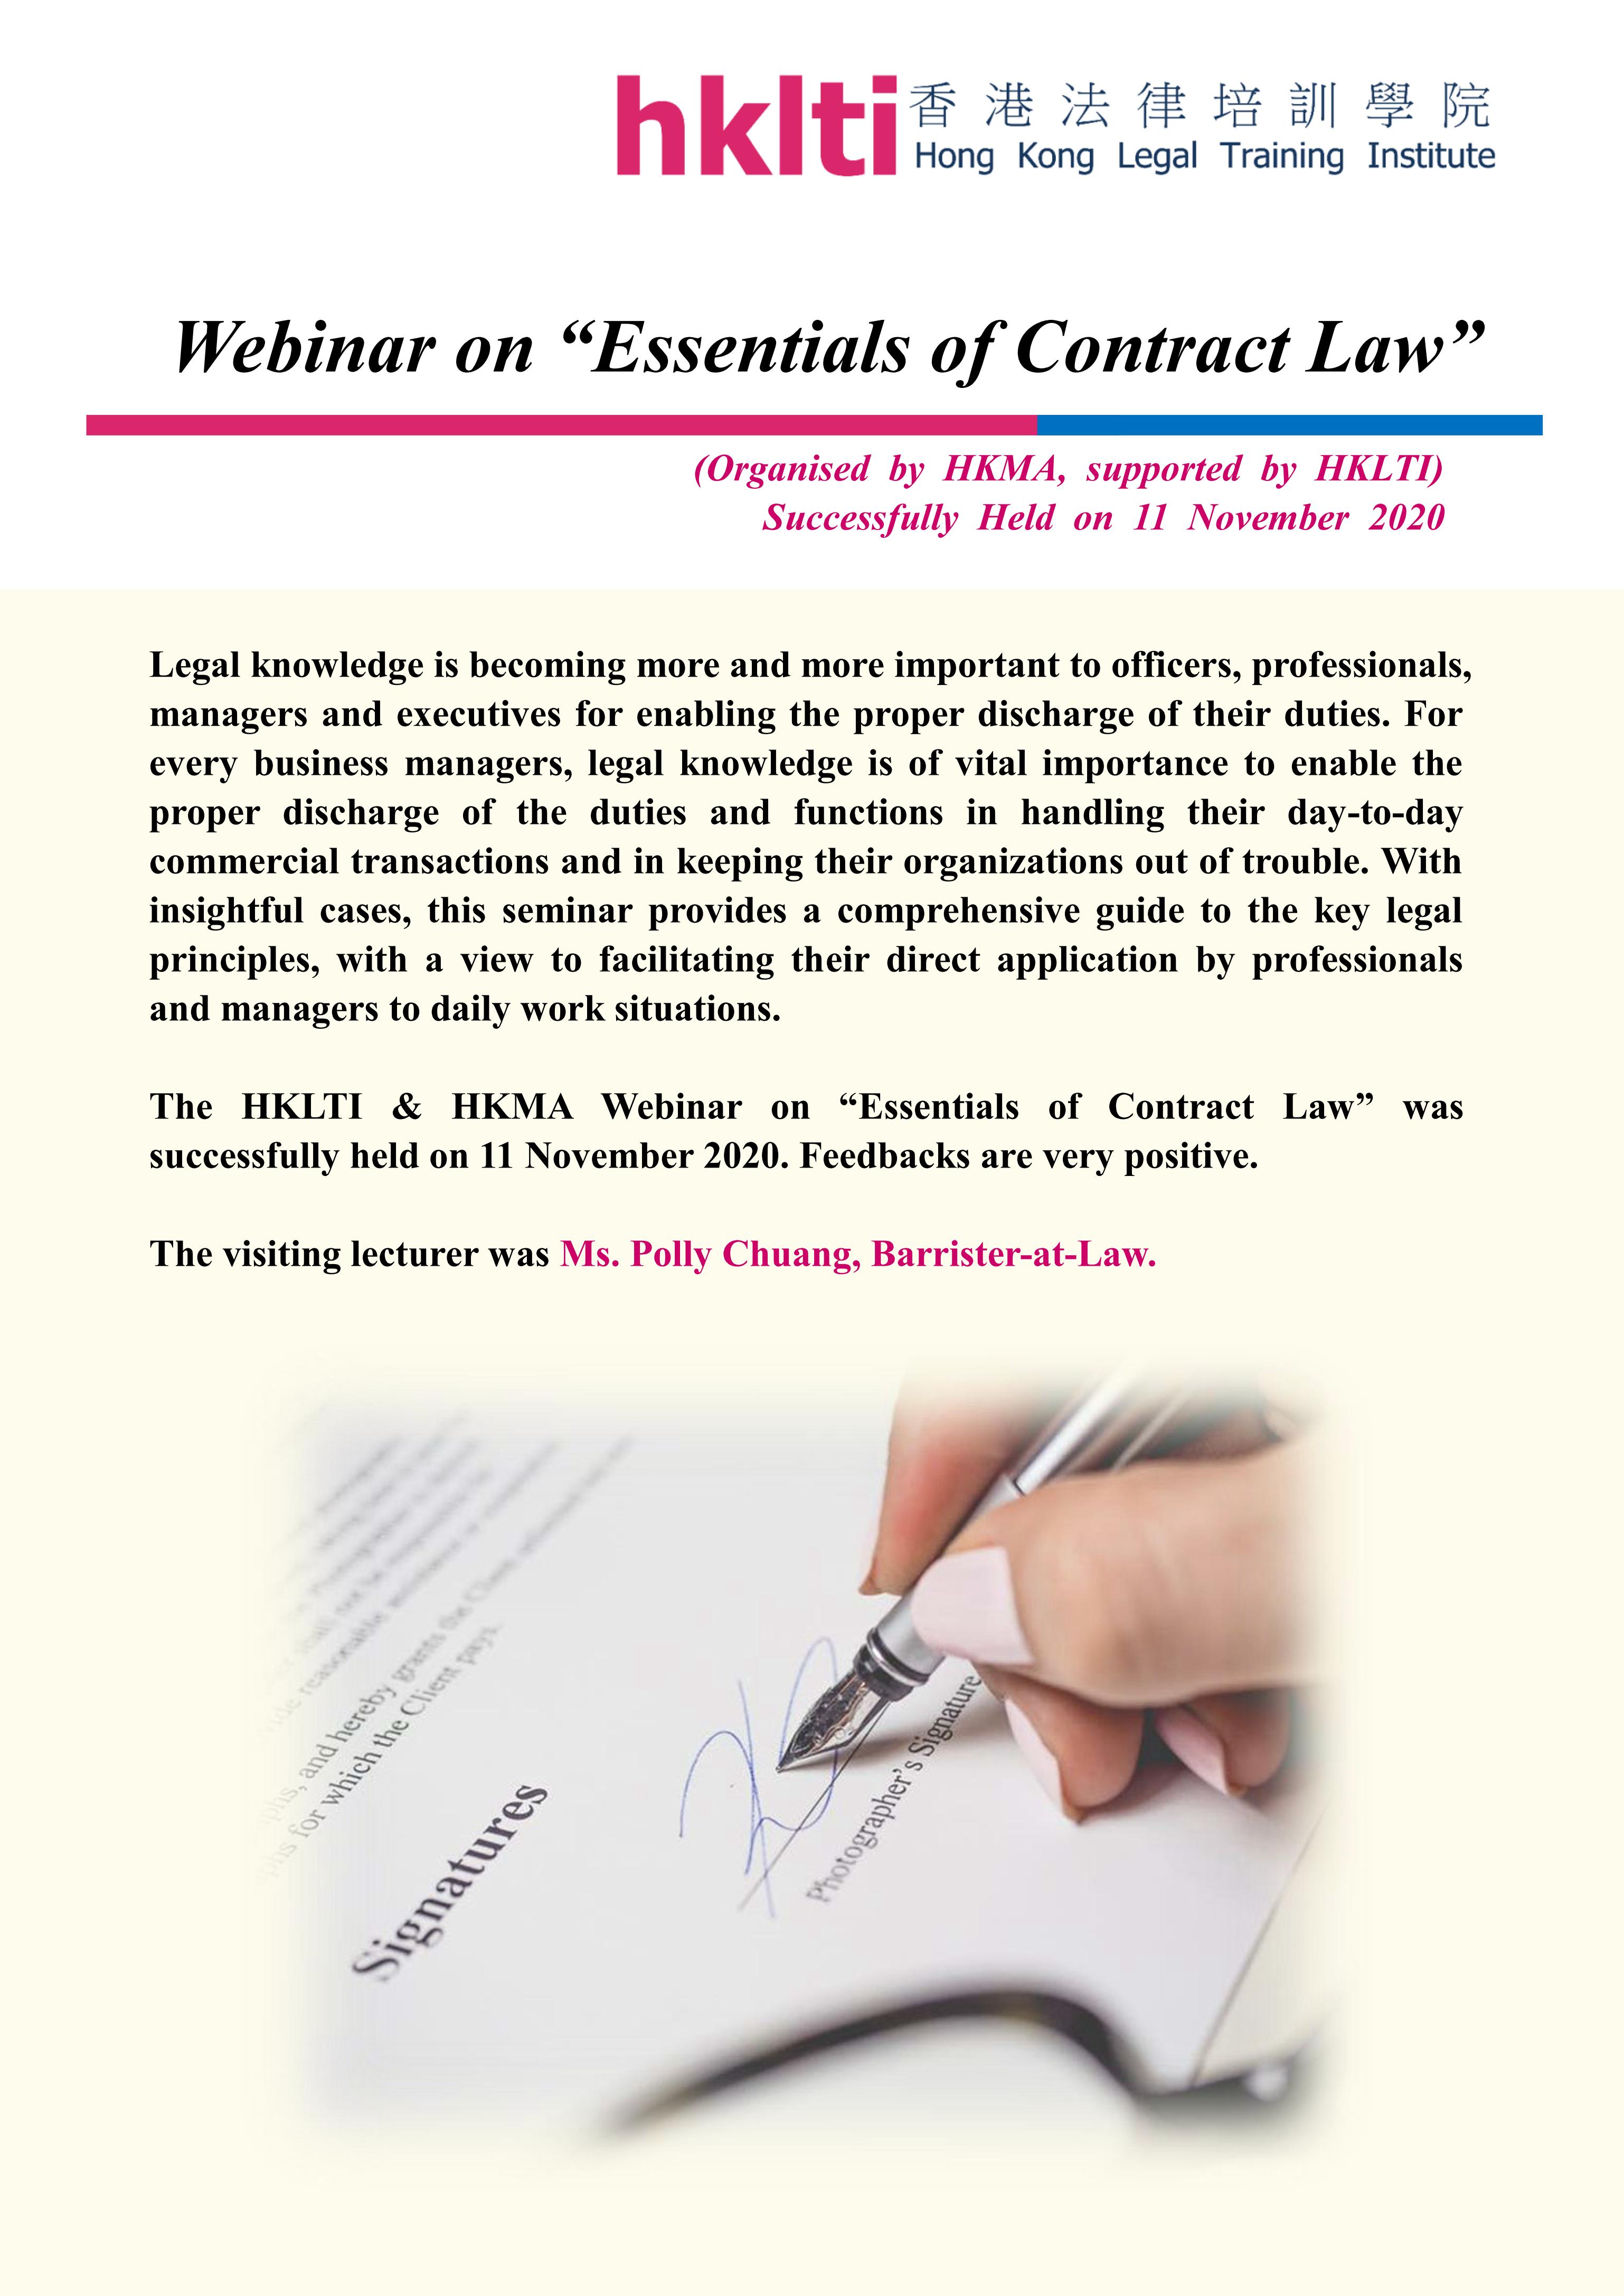 hklti essentials of contract law seminar report 20201111